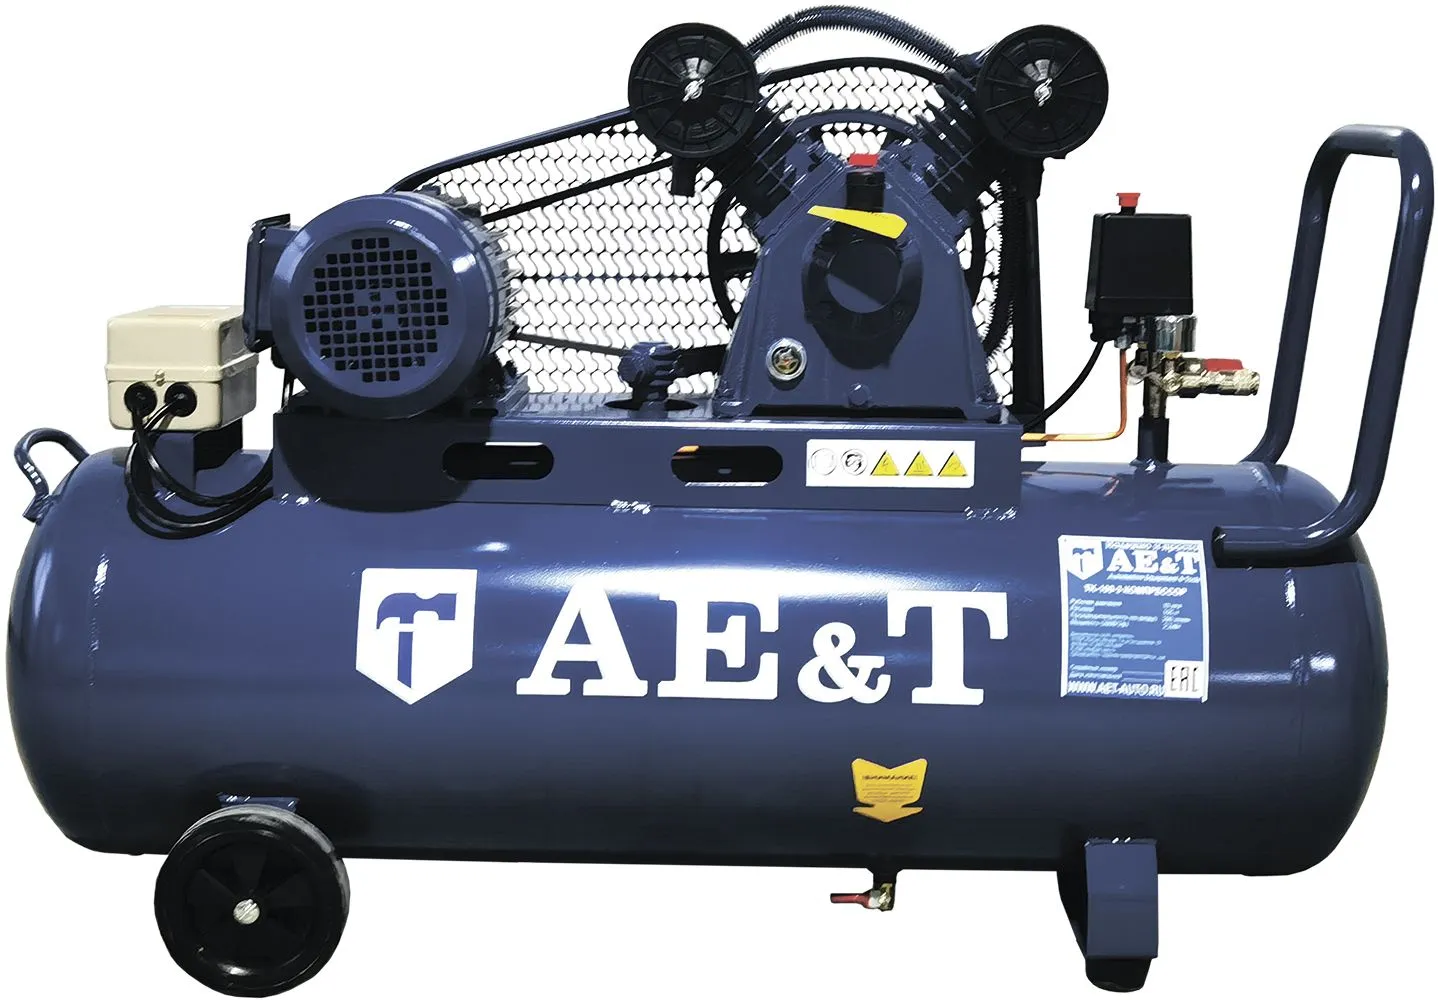 AE&T TK-100-3